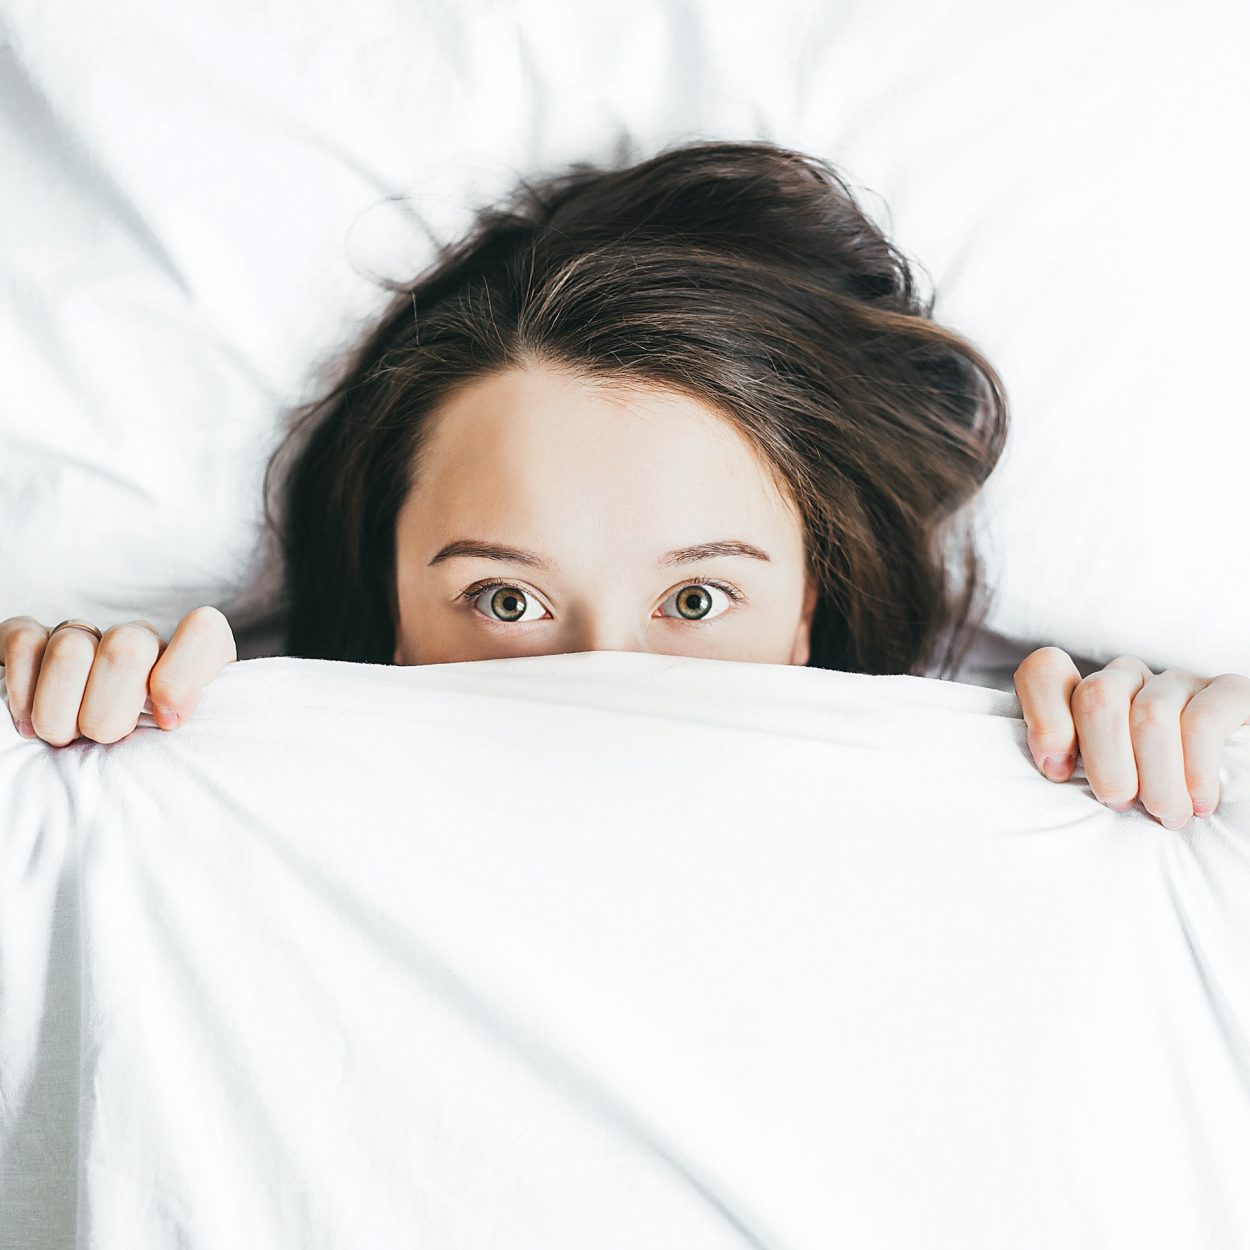 A woman has hidden her face with a white bedsheet